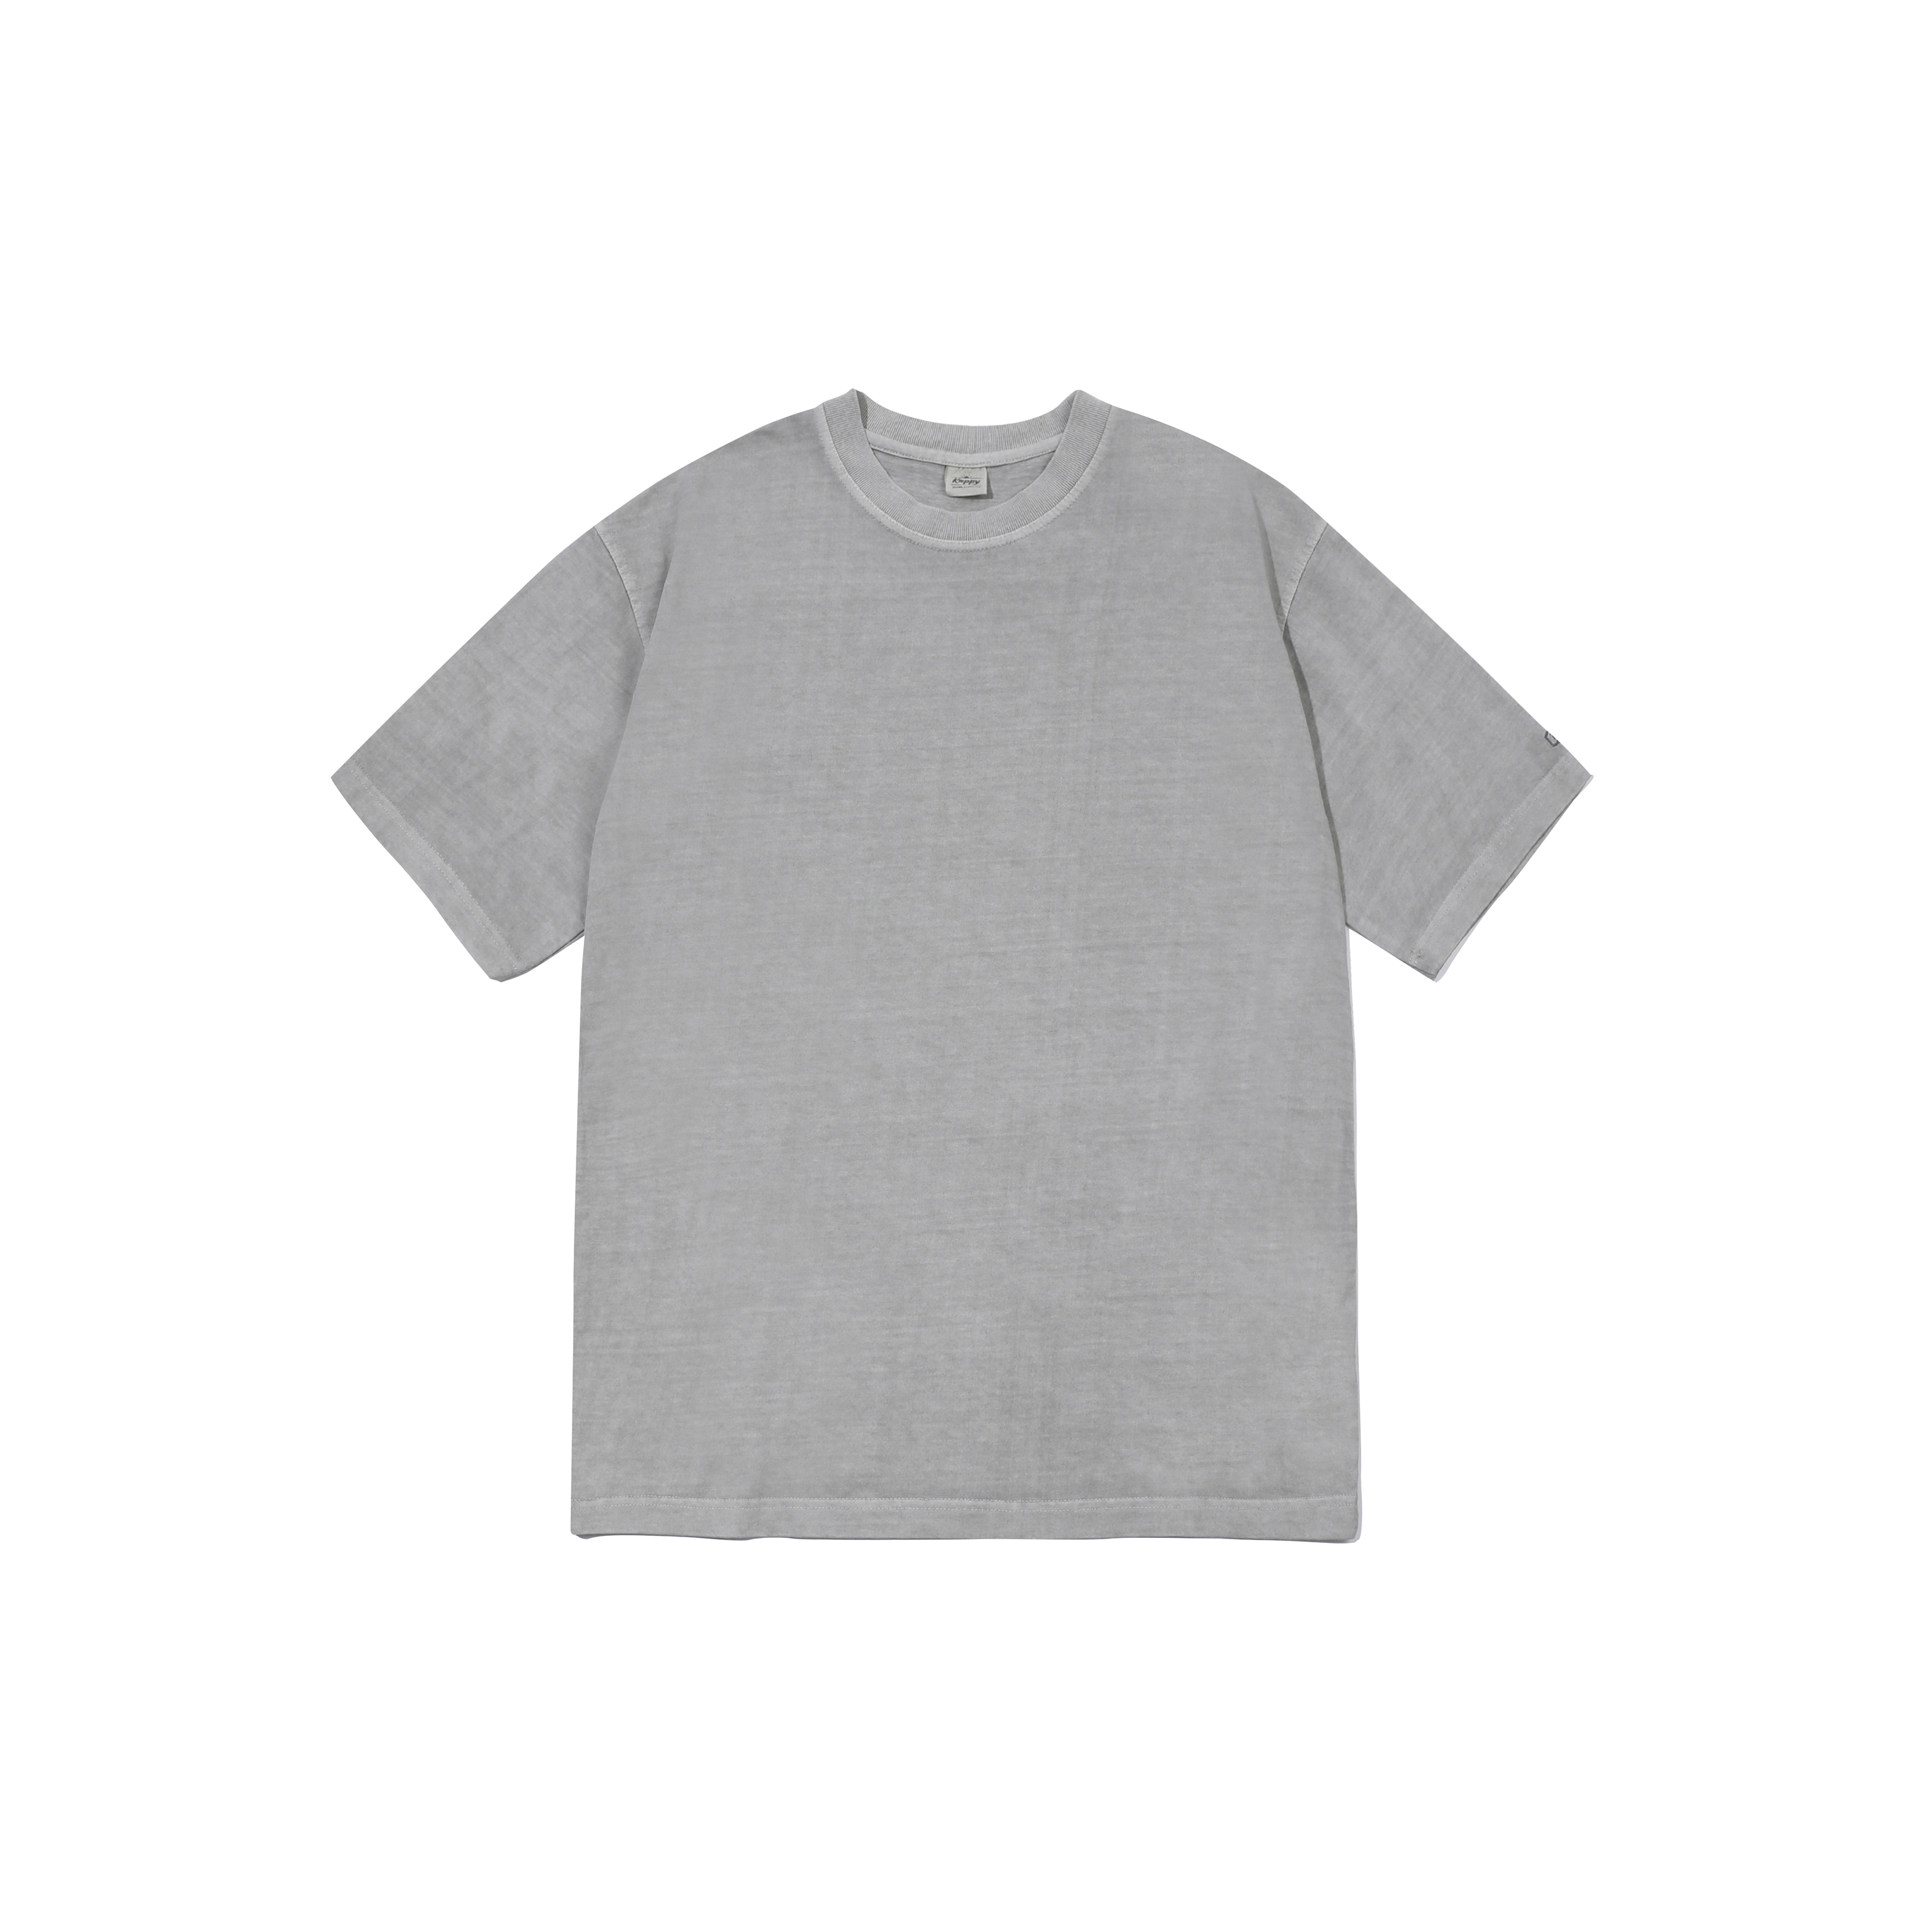 Pigment t-shirt light gray